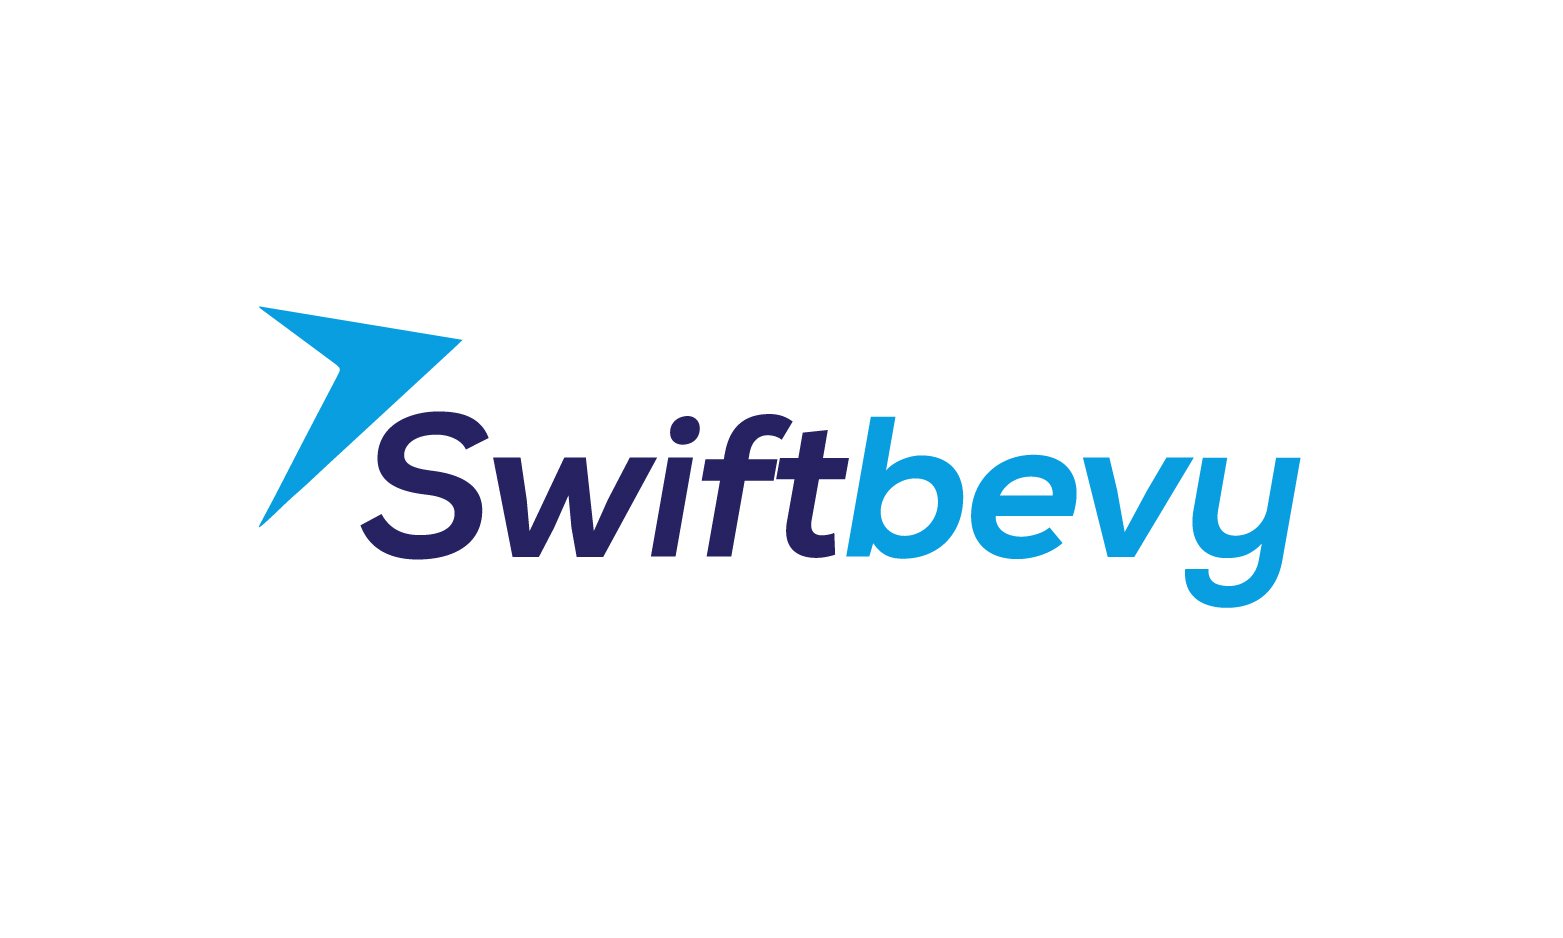 Swiftbevy.com - Creative brandable domain for sale